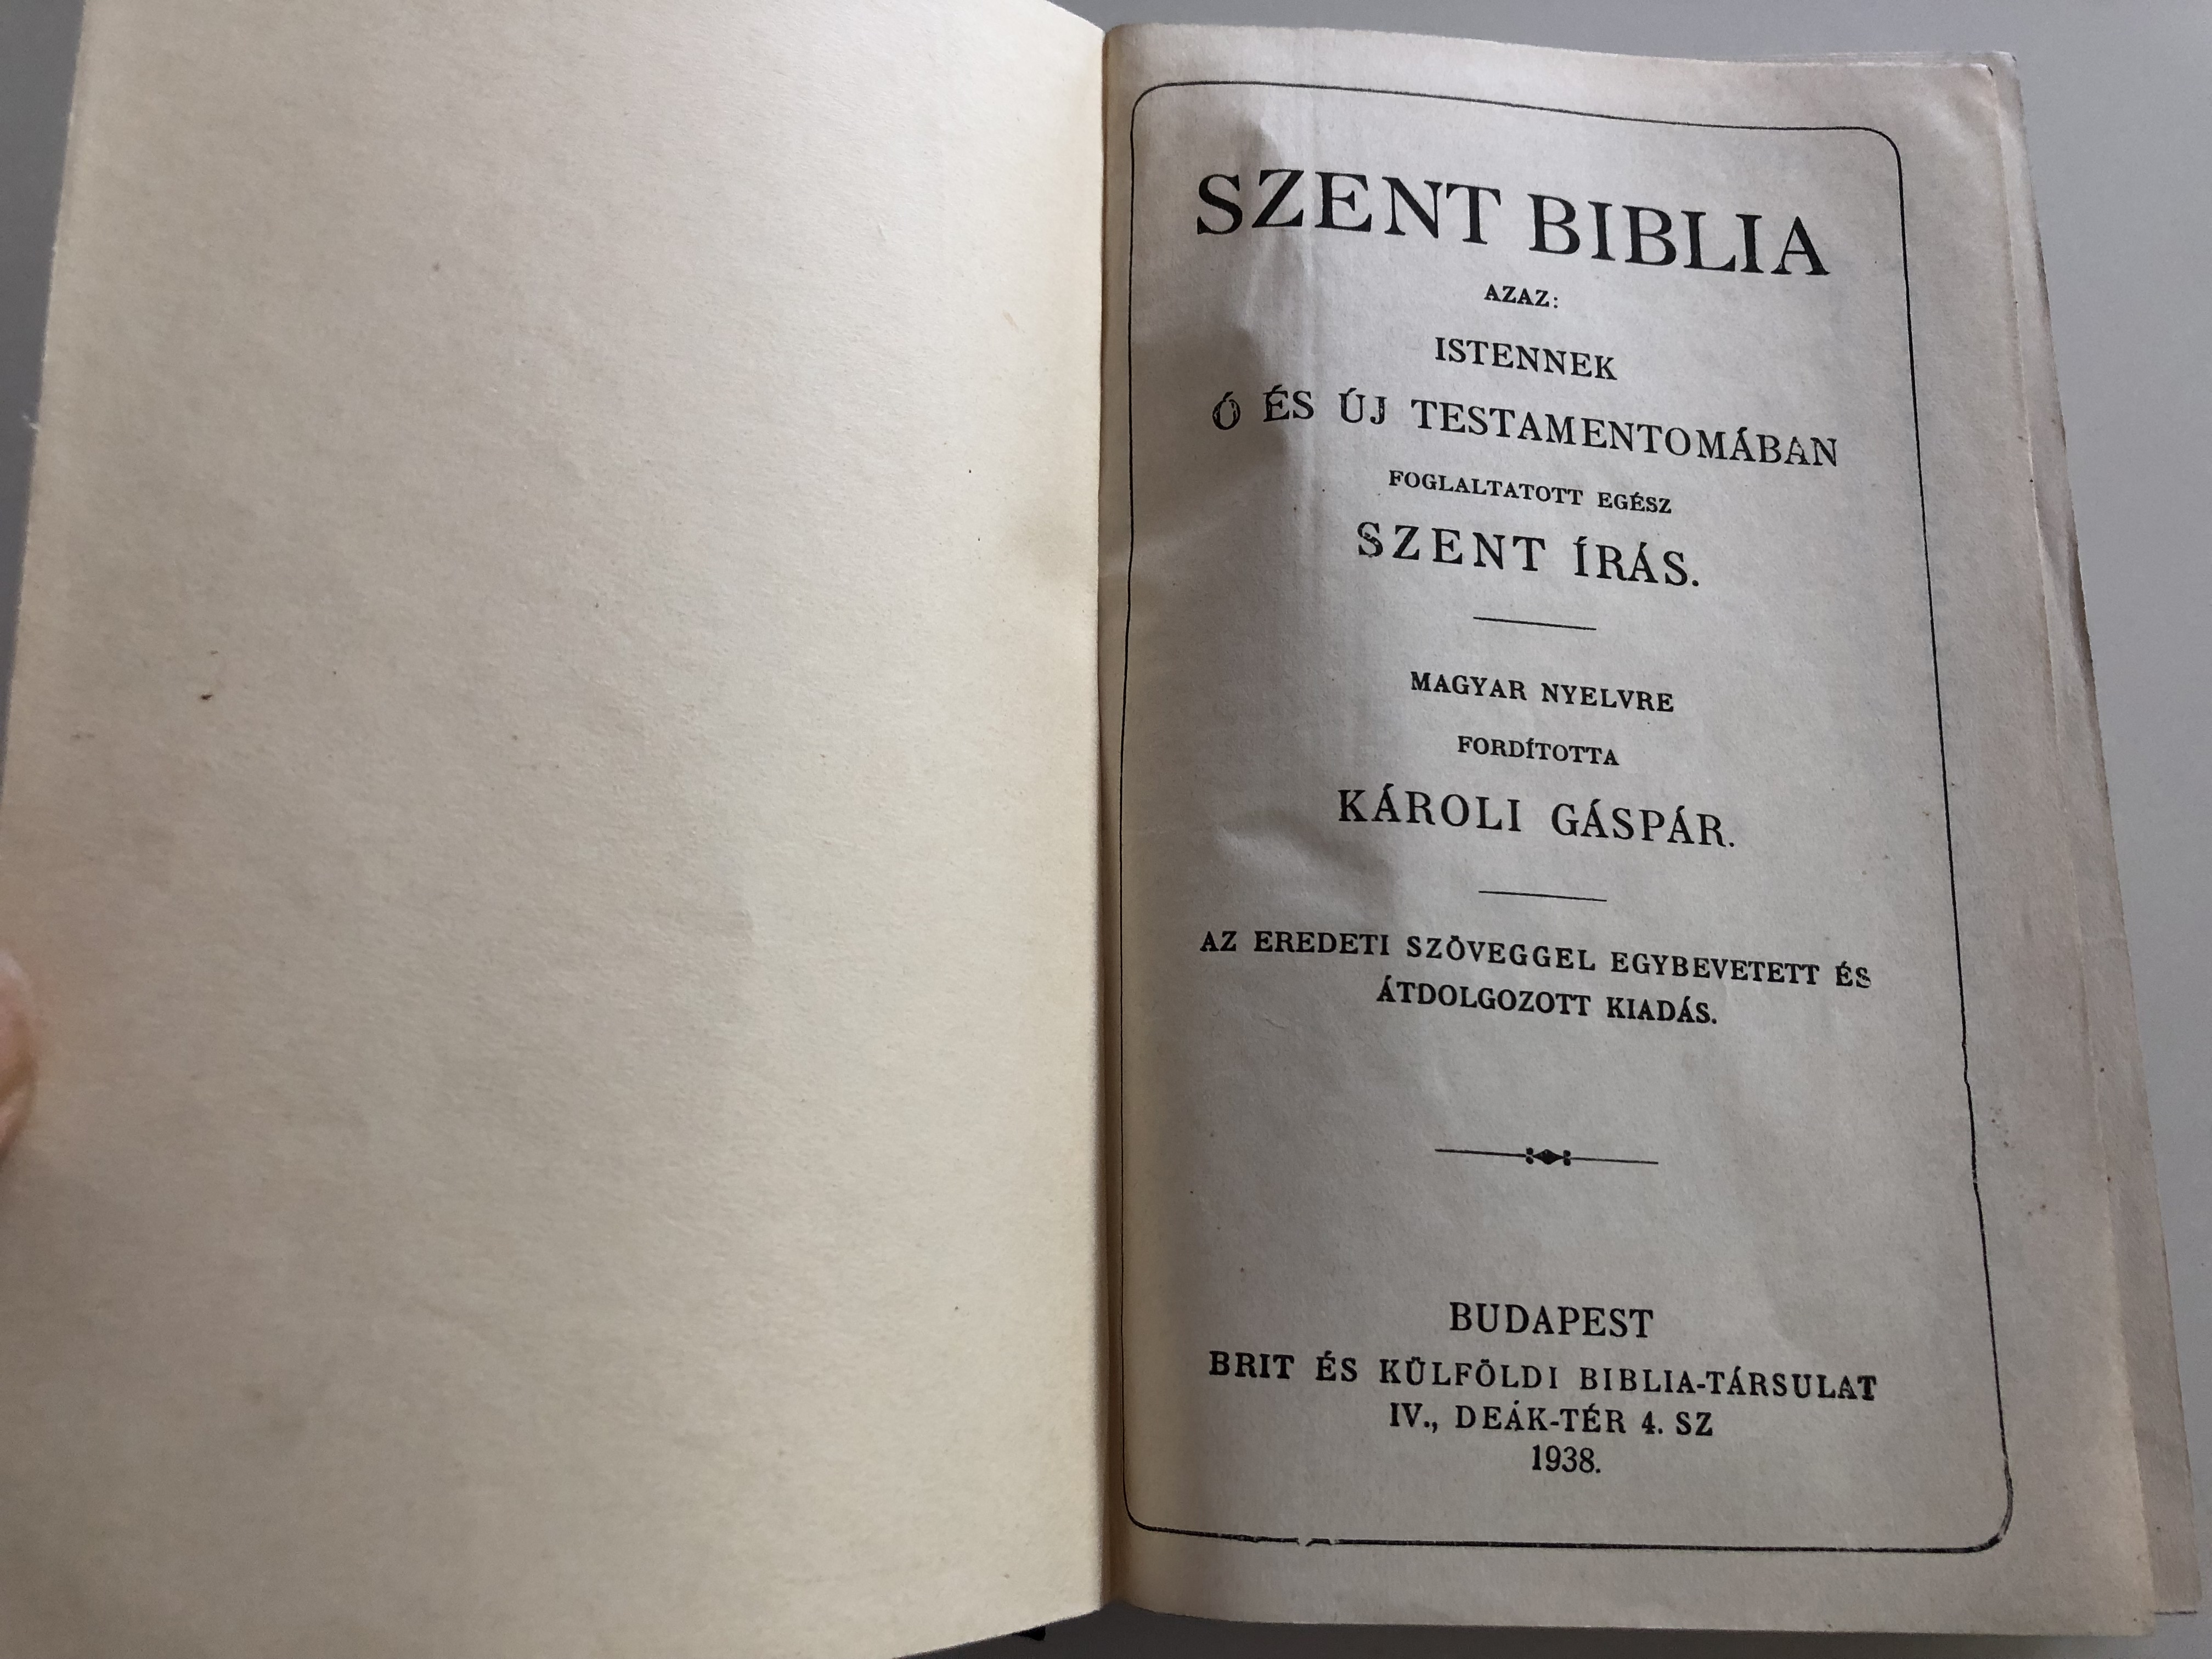 hungarian-holy-bible-szent-biblia-istennek-s-j-testamentom-ban-foglaltatott-eg-sz-szent-r-s-british-bible-society-1938-k-roli-g-sp-r-translation-hardcover-3-.jpg